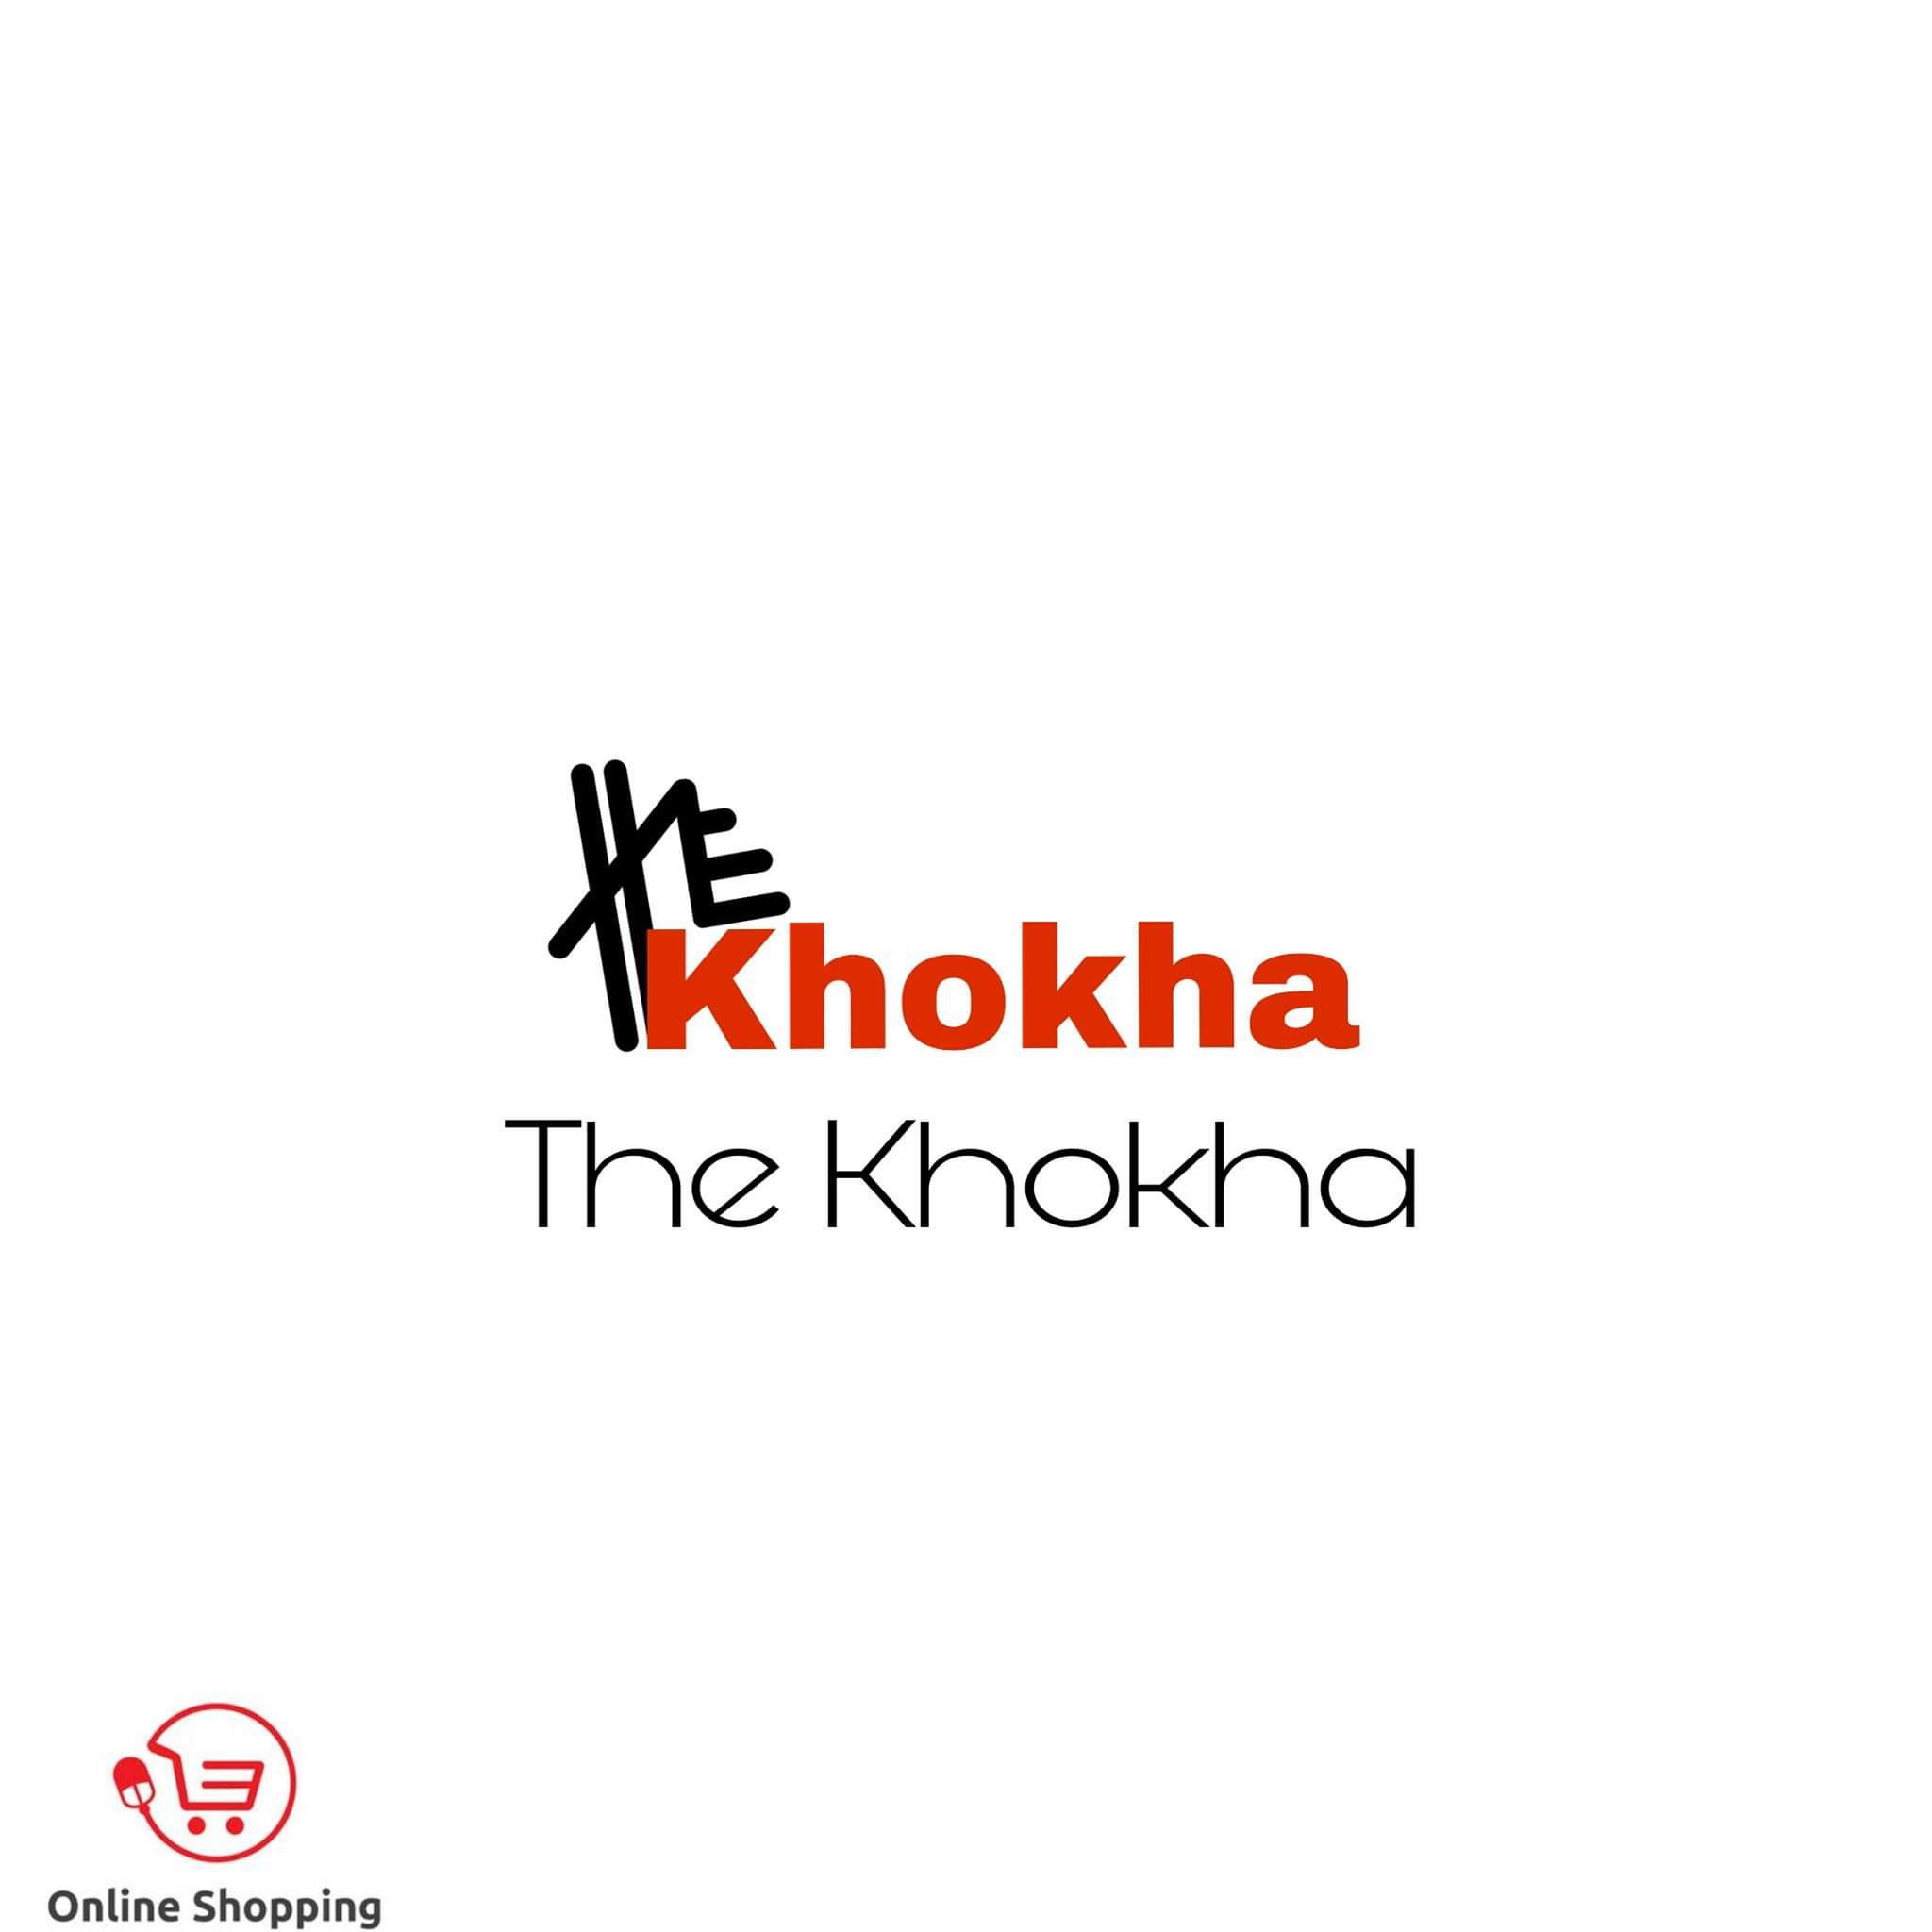 The Khokha